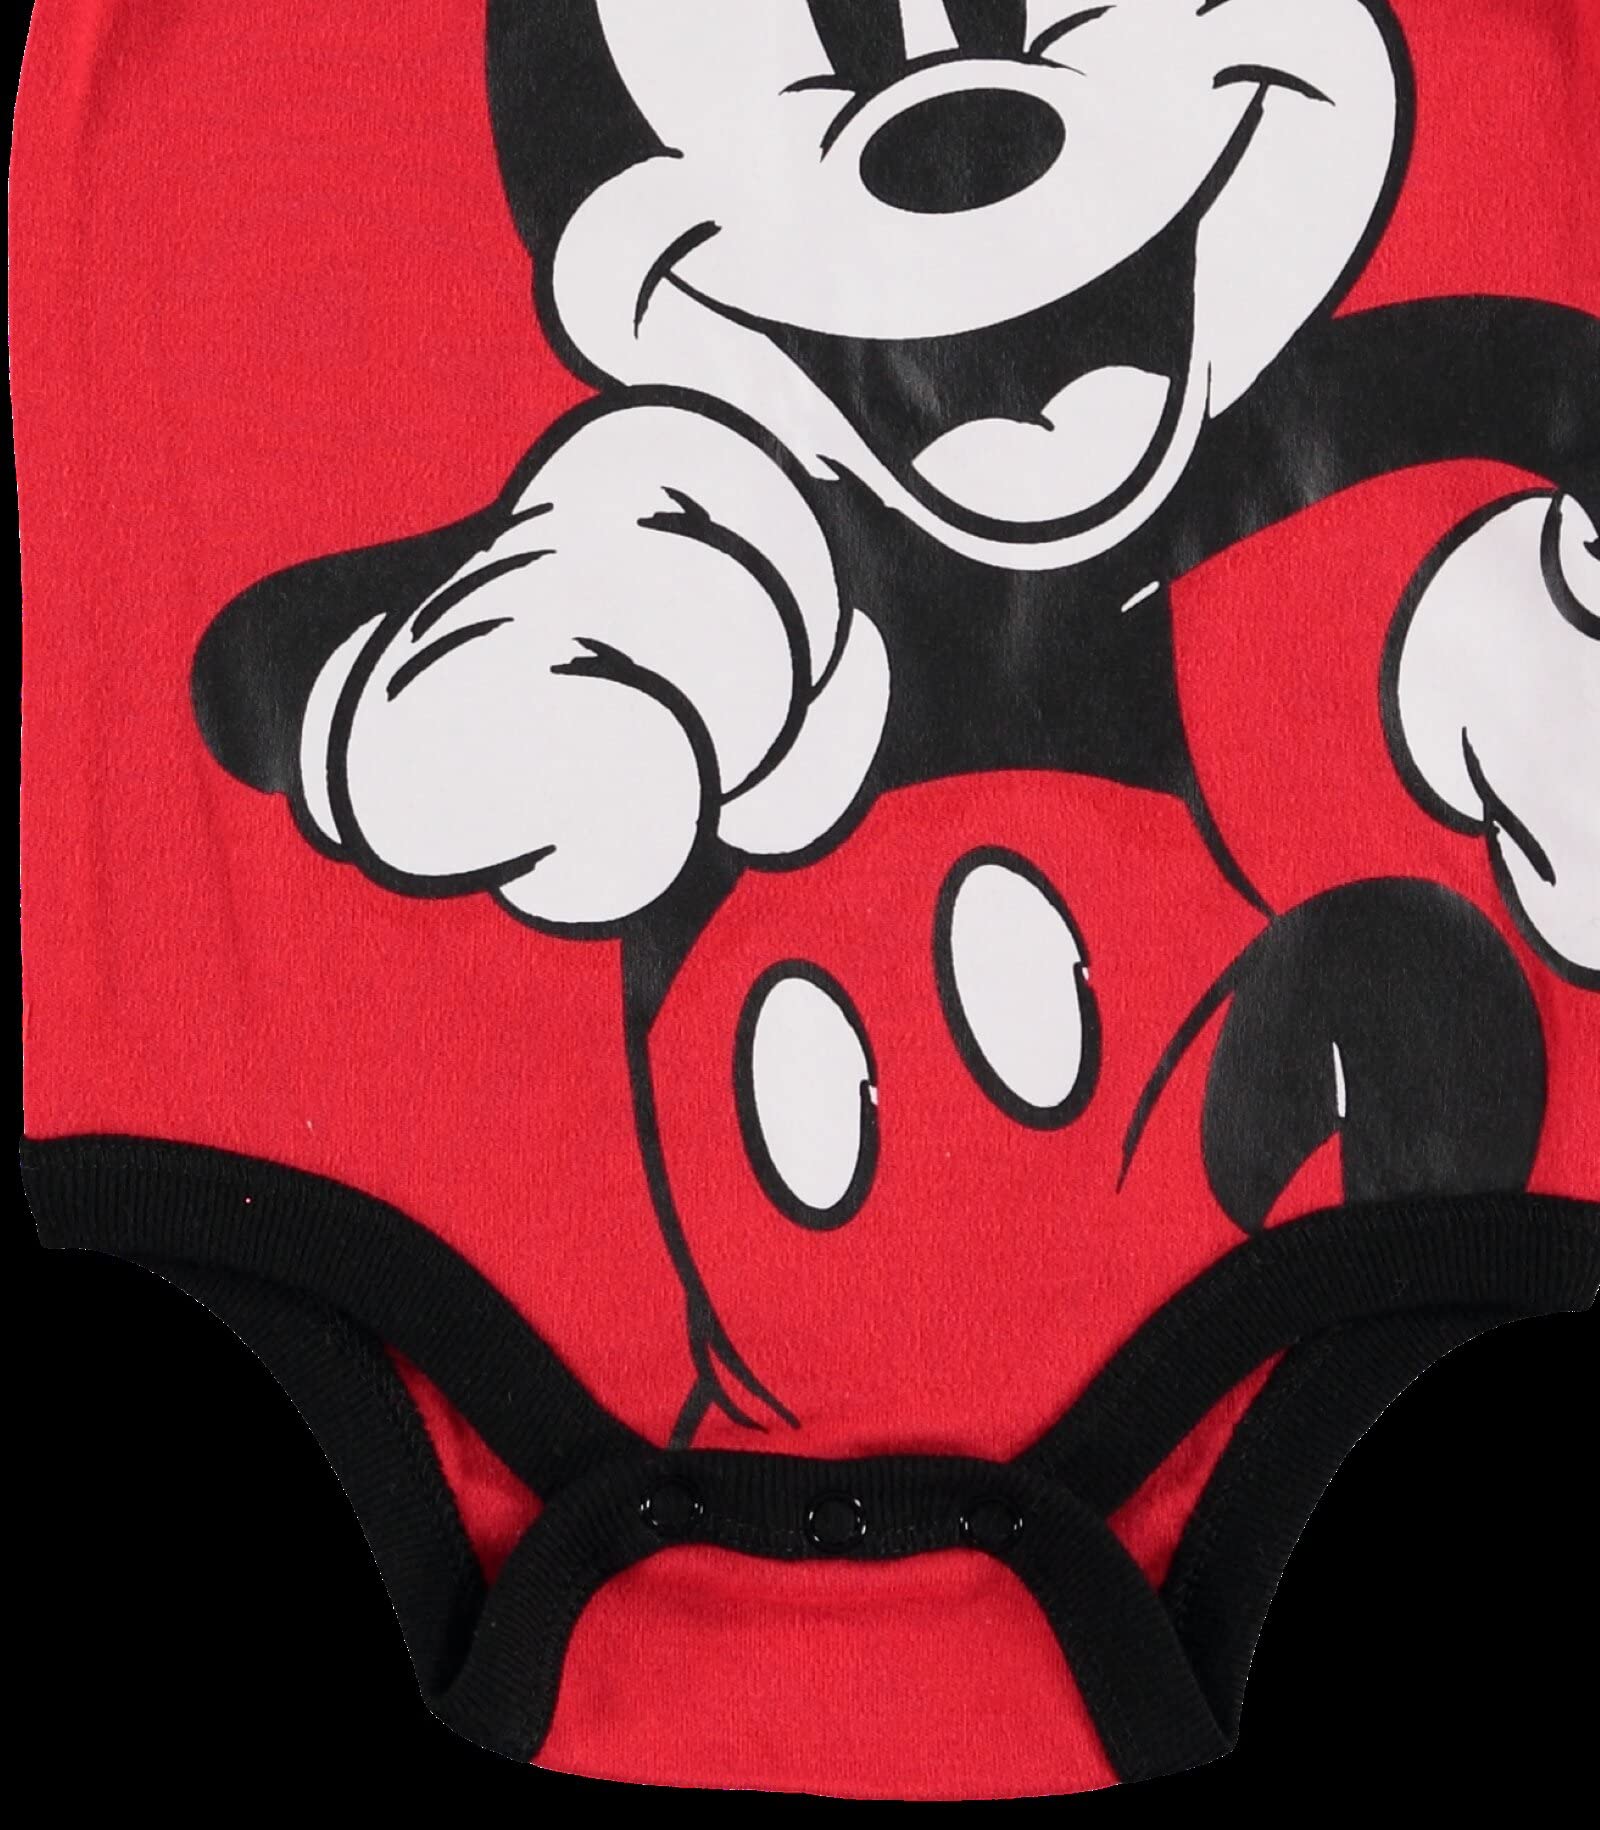 Disney Mickey Mouse 4 Piece Outfit Set: Bodysuit Pants Bib Hat